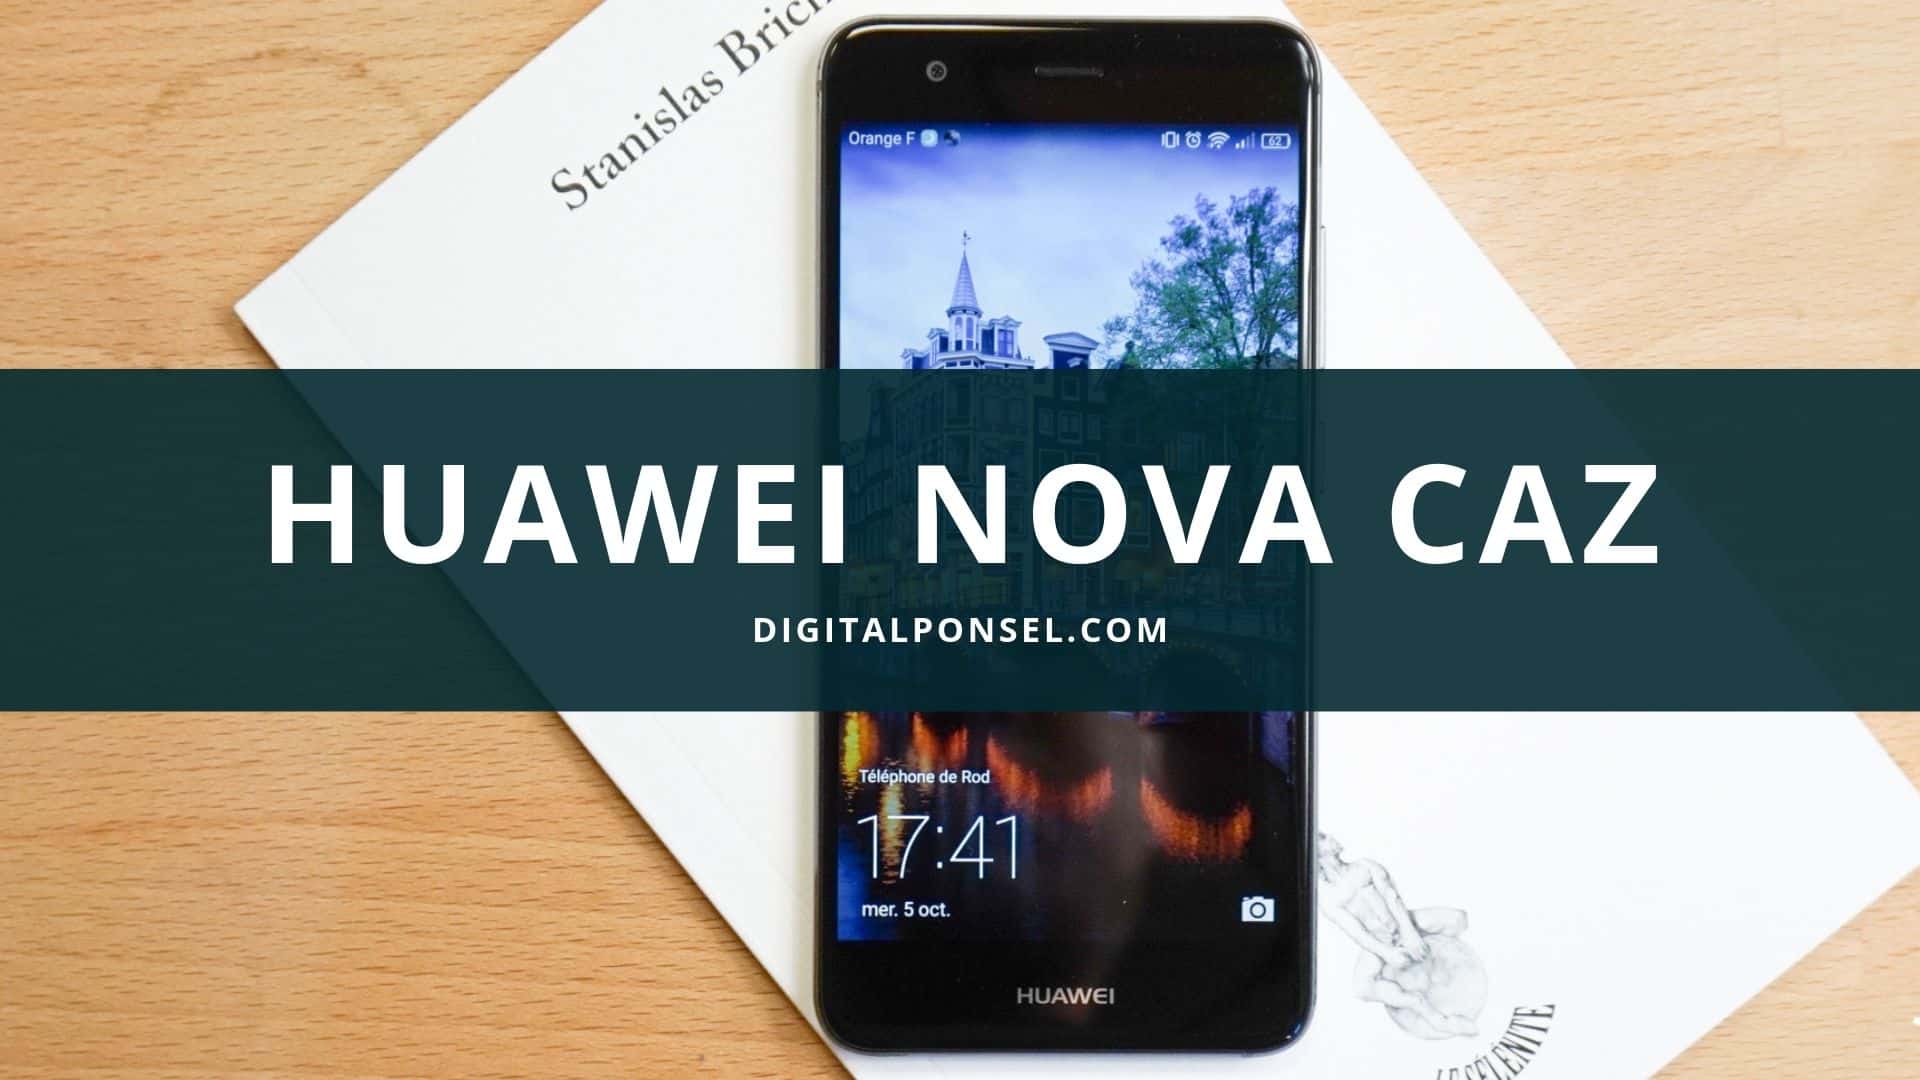 Huawei Nova Caz